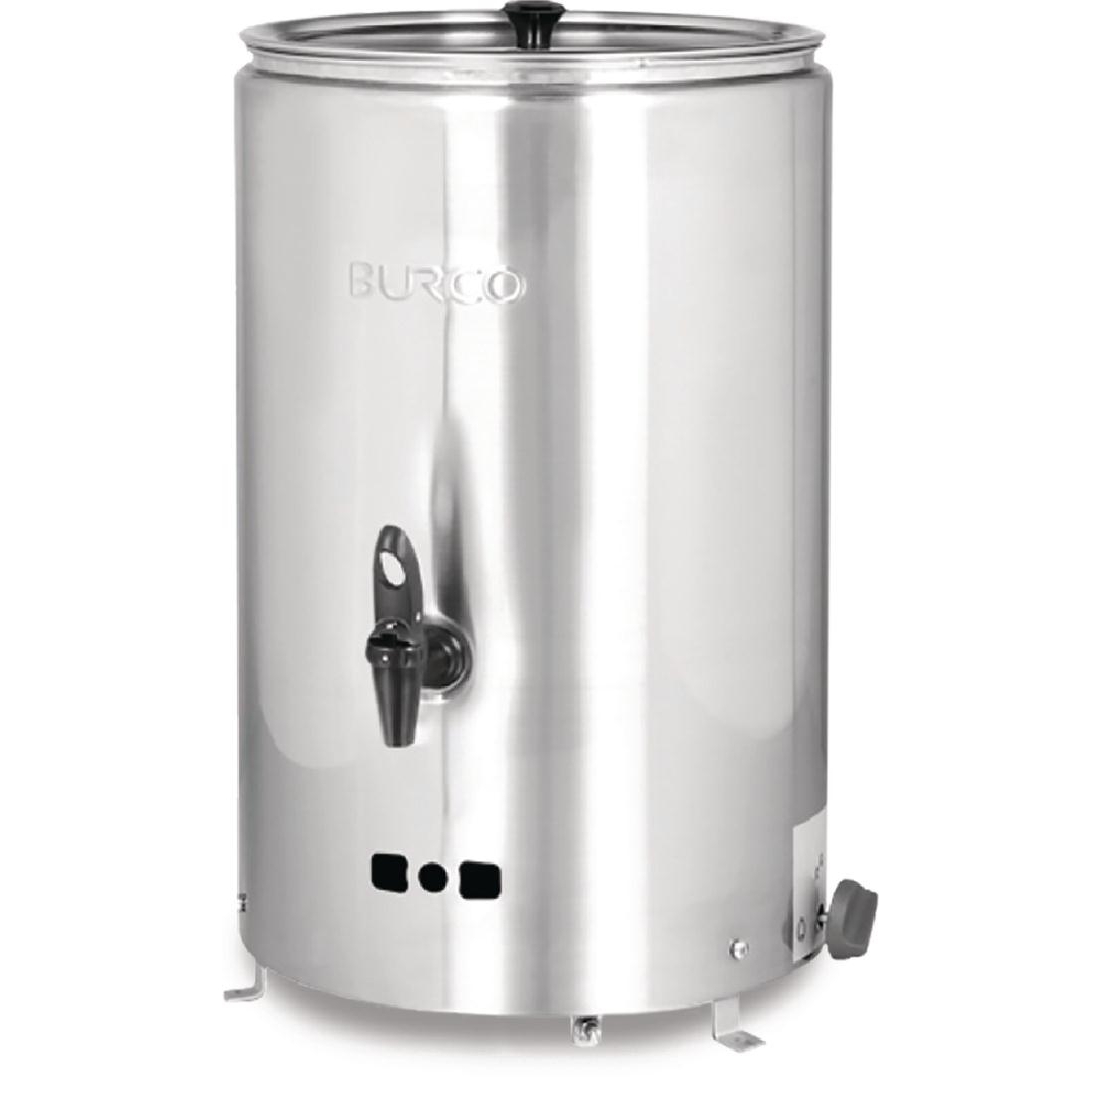 Burco Manual Fill Water Boiler Deluxe 20Ltr Gas